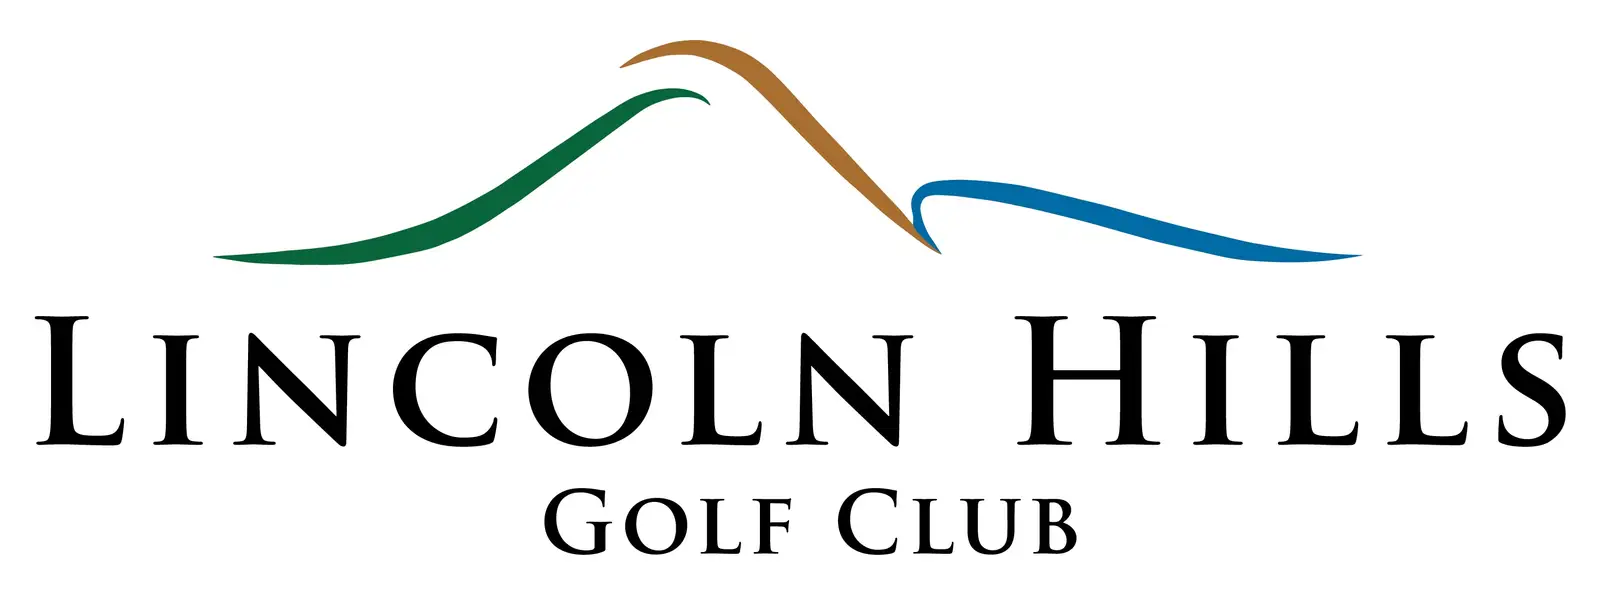 Lincoln Hills Gold Club logo